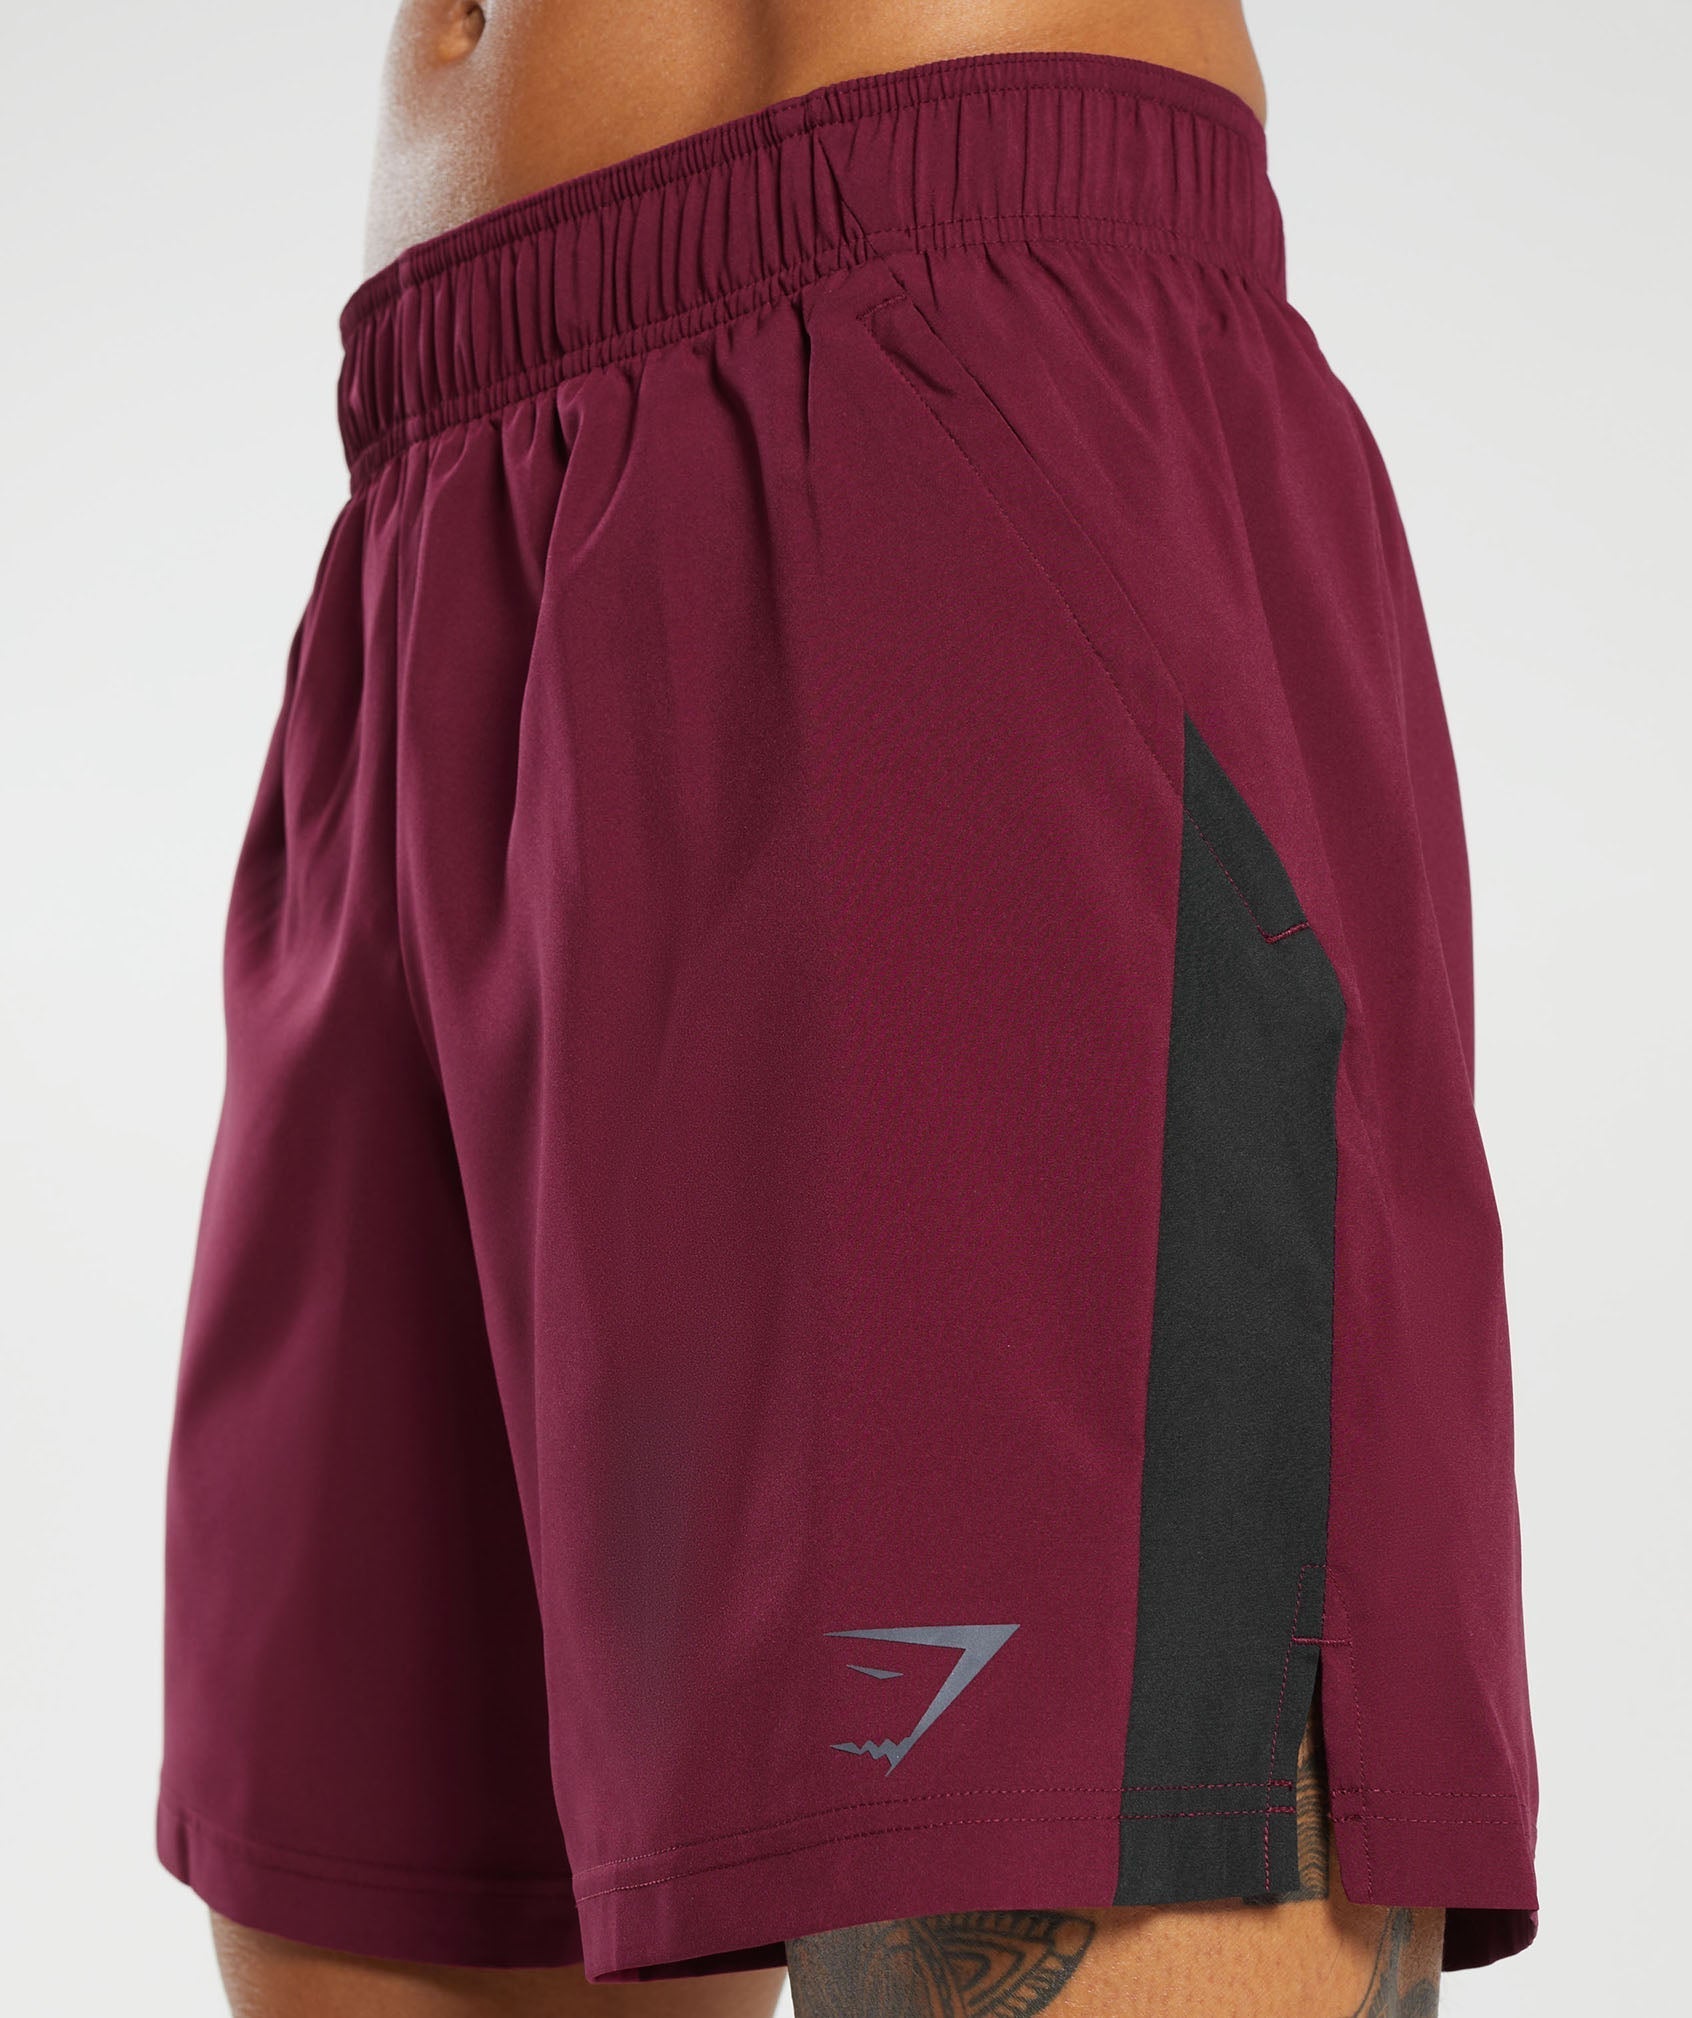 Gymshark Sport 7 Shorts - Plum Pink/Black